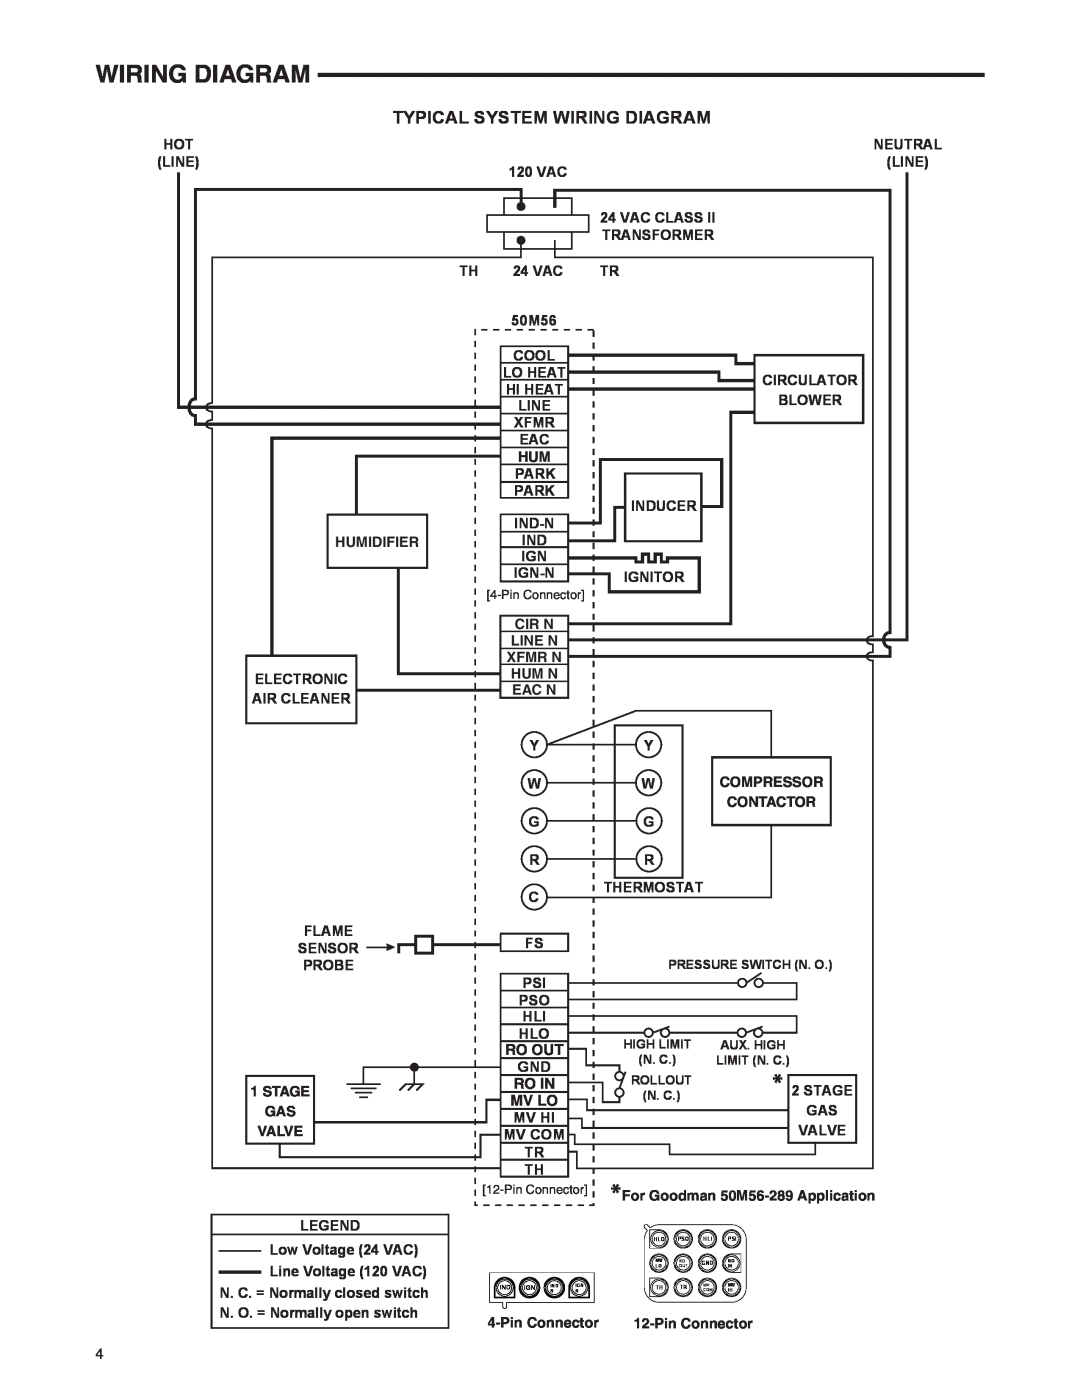 White Rodgers 50M56U-843 Typical System Wiring Diagram, Humidifier, Cir N, Line N, Xfmr N, Hum N, Eac N, Compressor 